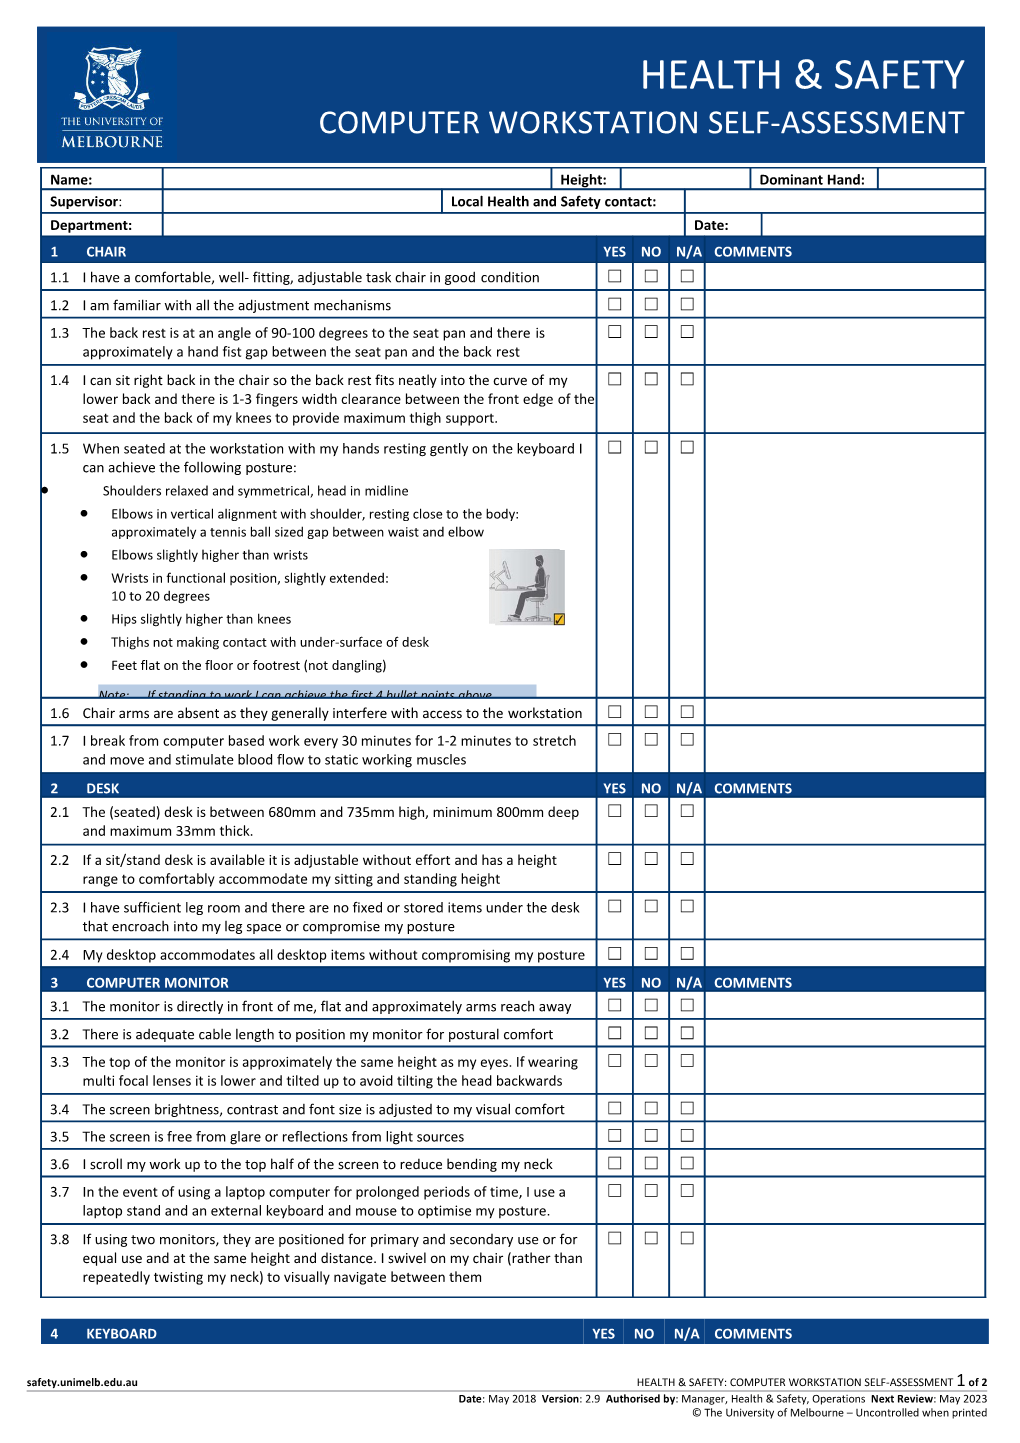 Computer Workstation Ergonomic Self-Assessment Checklist (Previously 'Keyboard Workstation